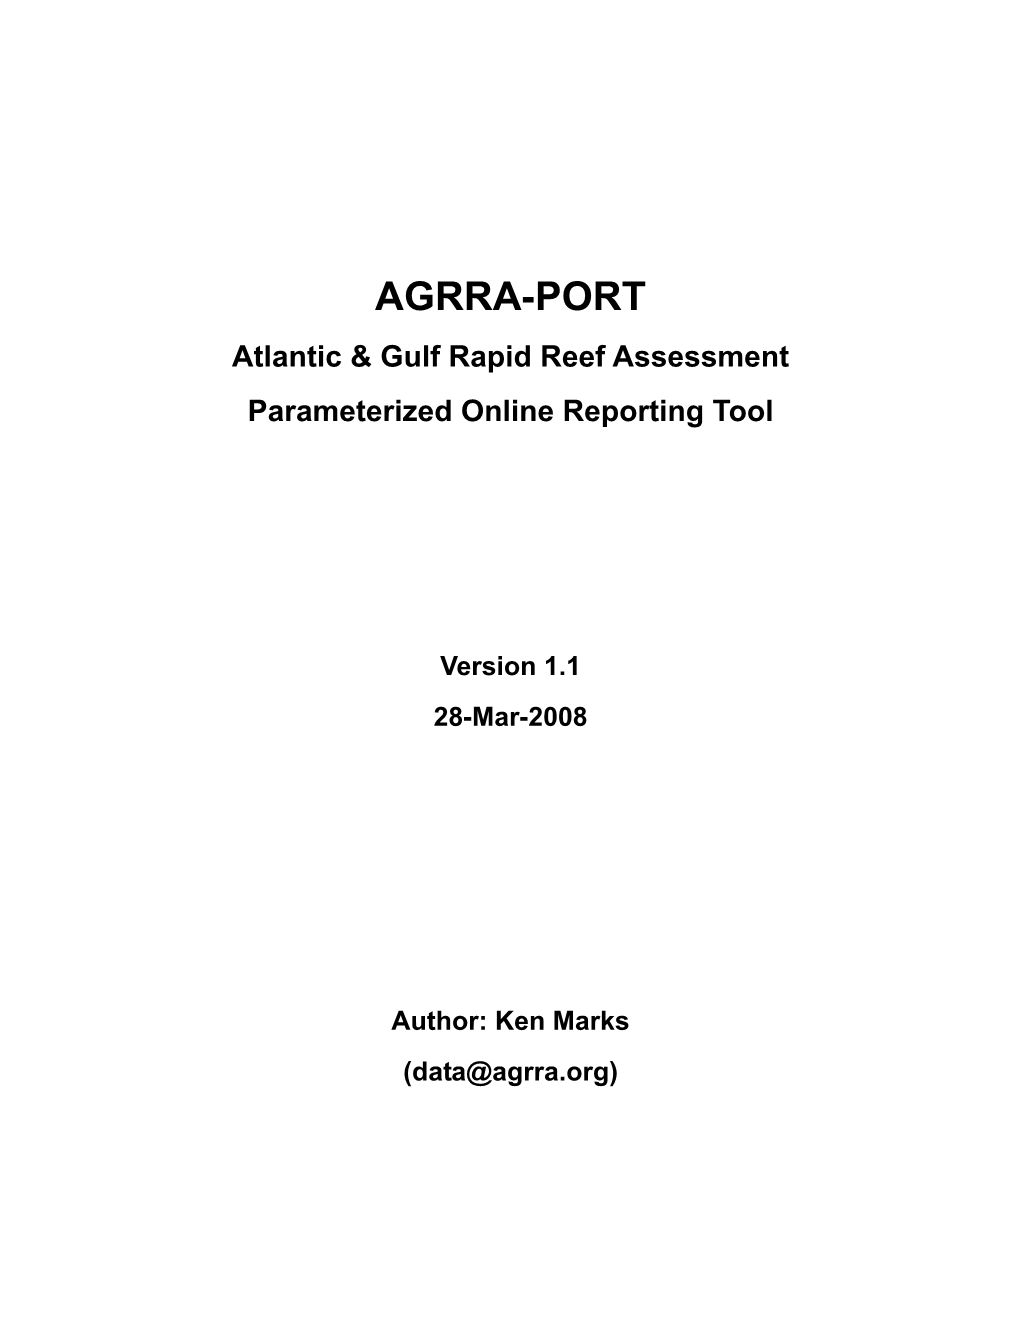 AGRRA-PORT Atlantic & Gulf Rapid Reef Assessment Parameterized Online Reporting Tool